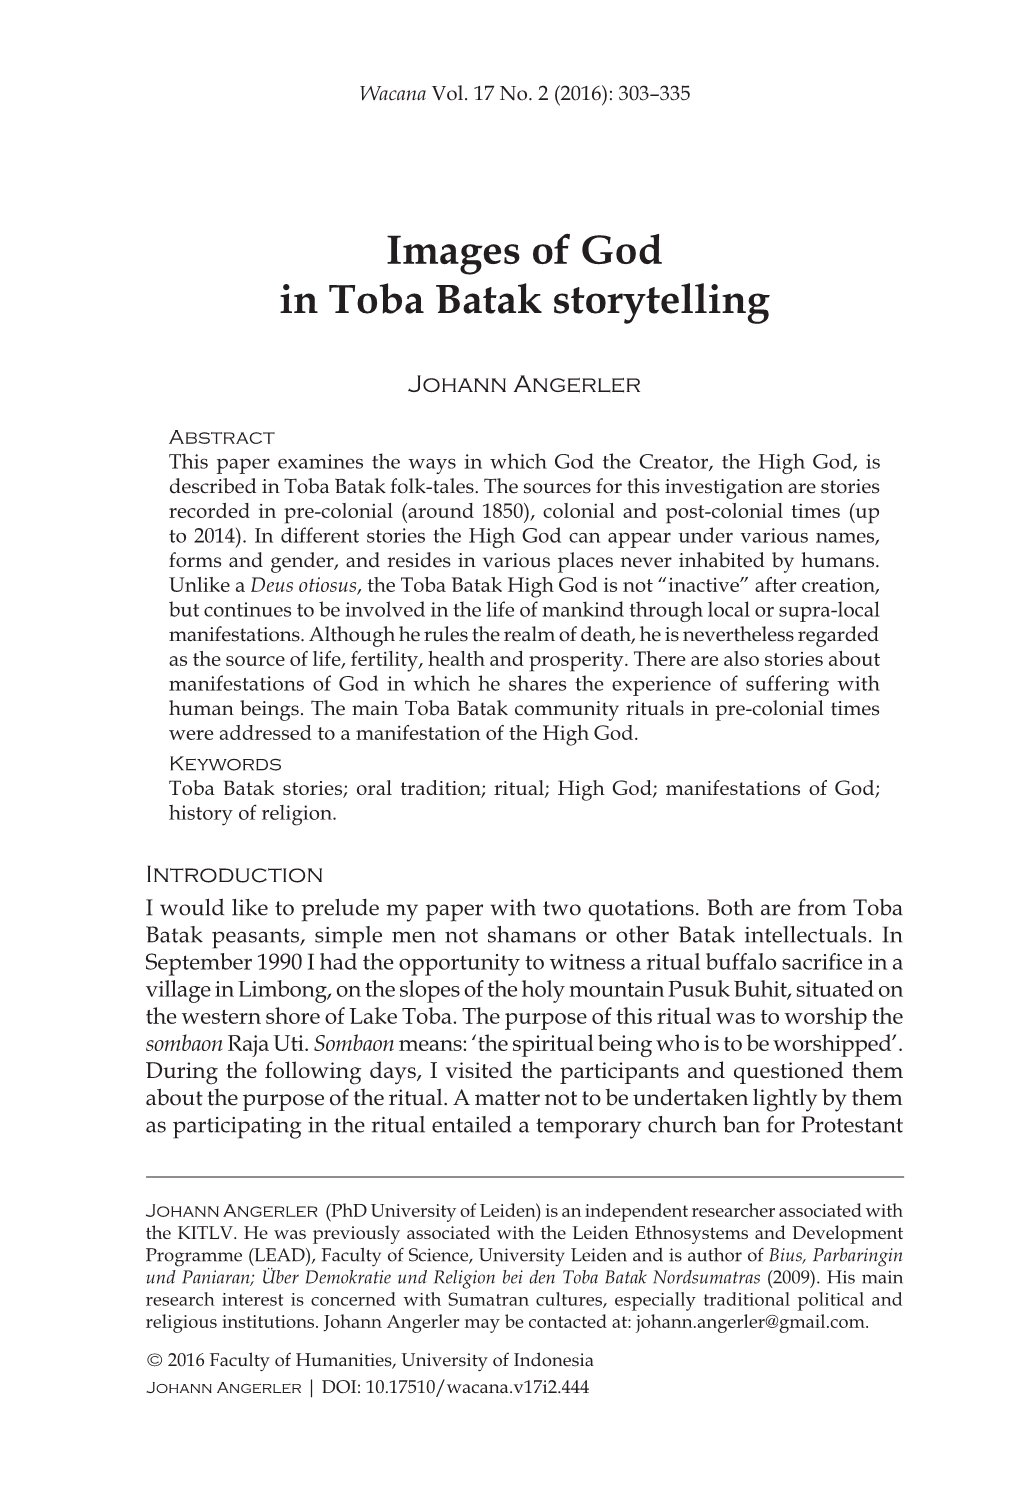 Images of God in Toba Batak Storytelling